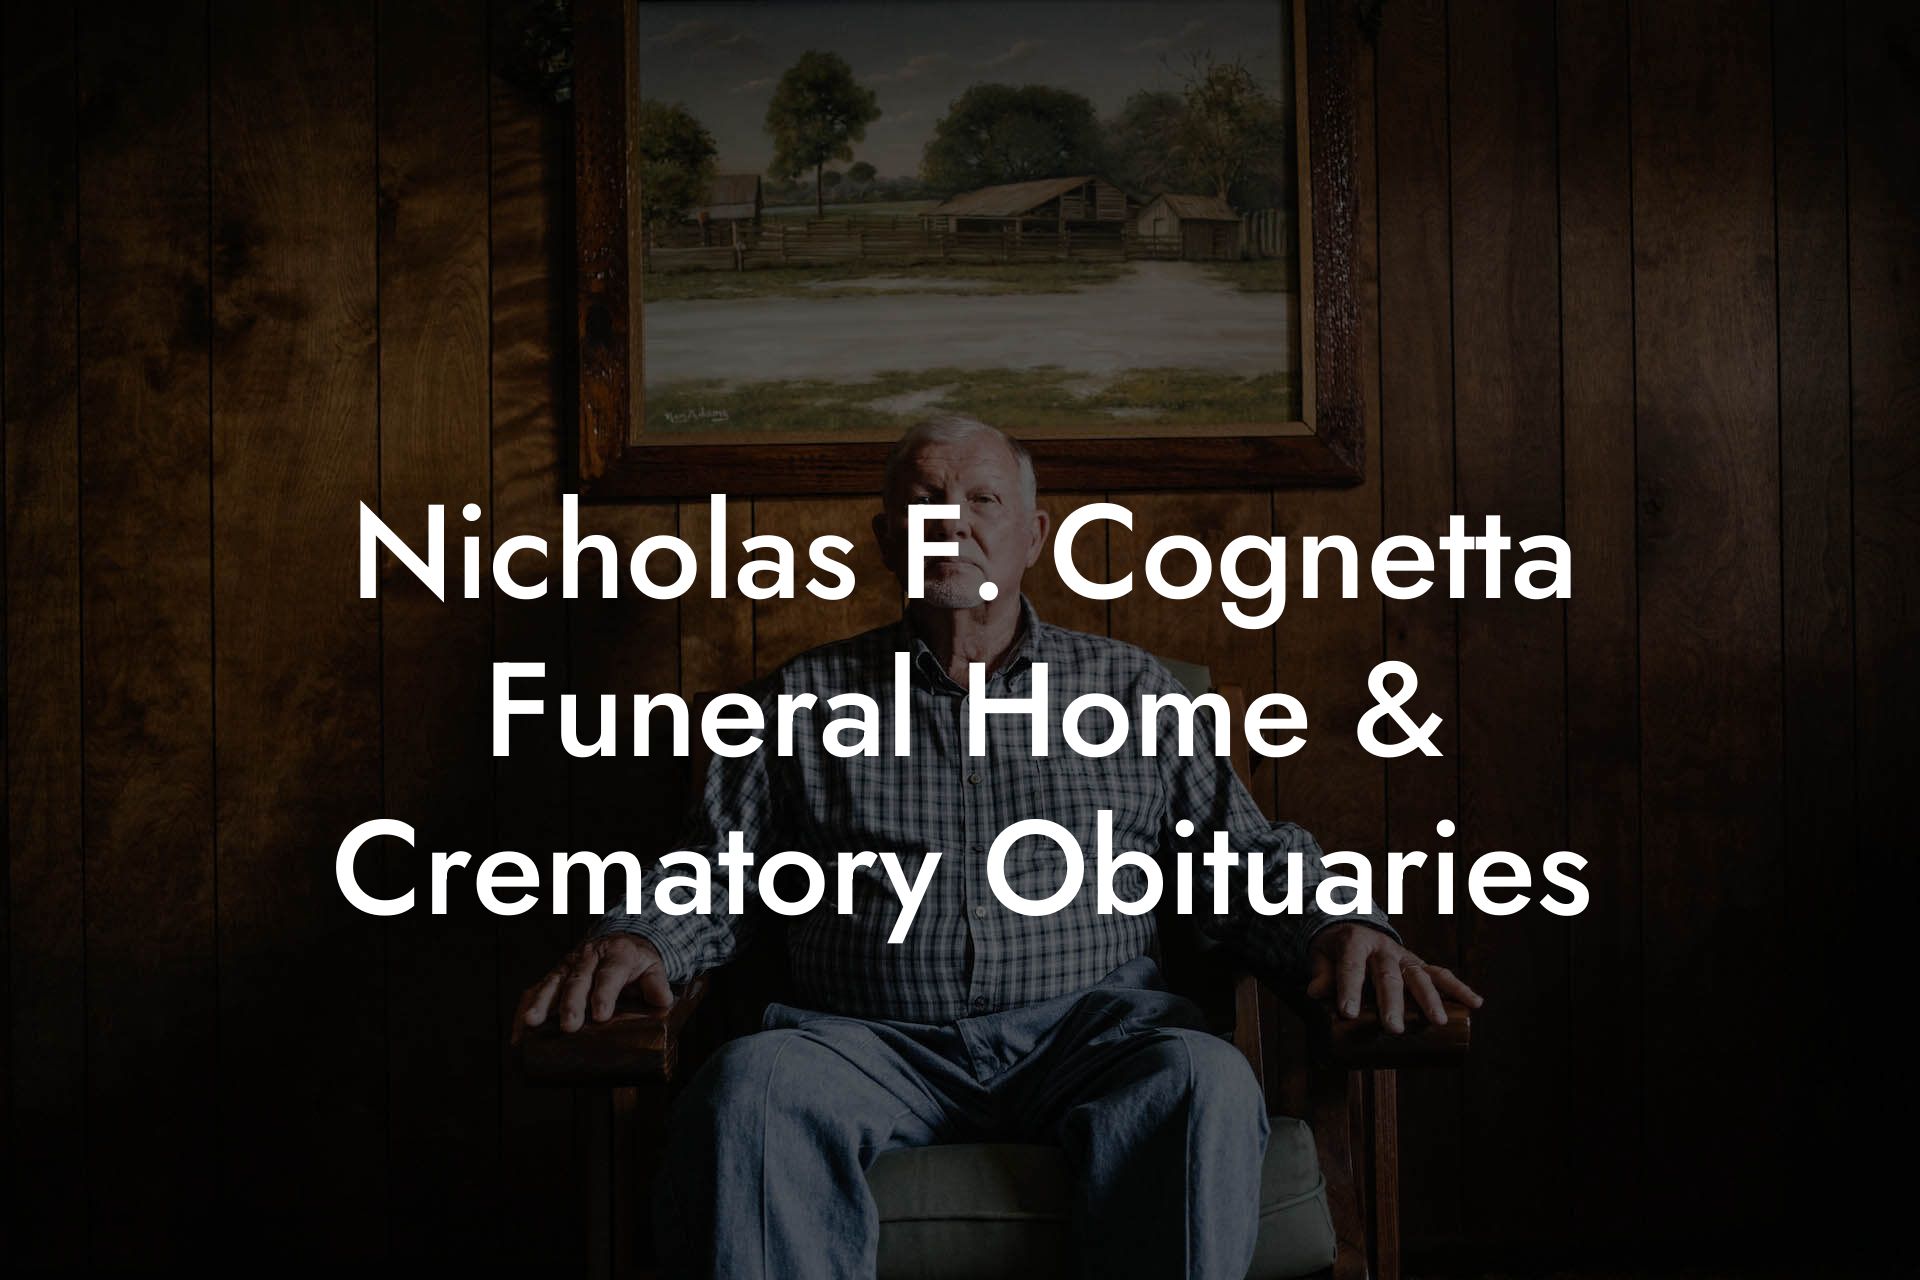 Nicholas F. Cognetta Funeral Home & Crematory Obituaries